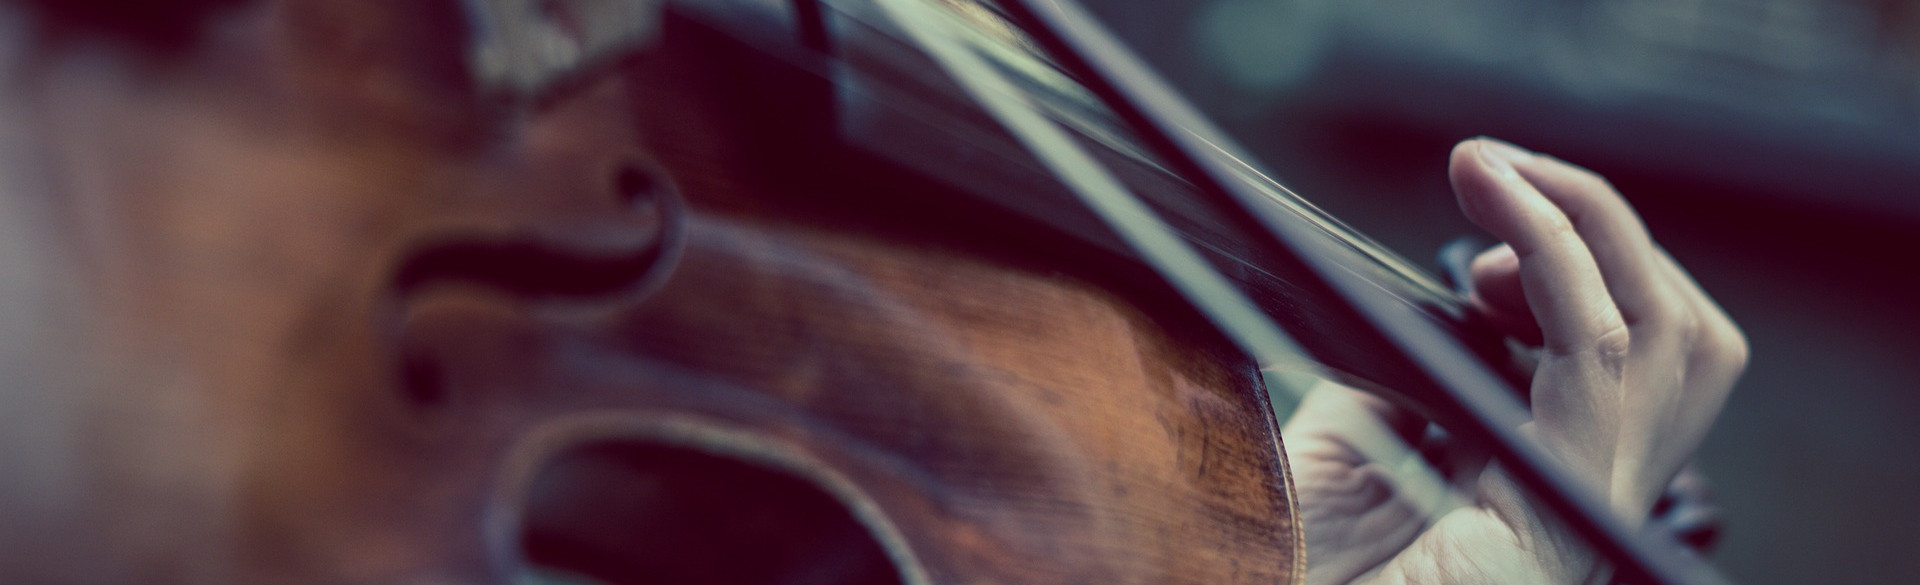 Violinenspieler*in, © pixabay